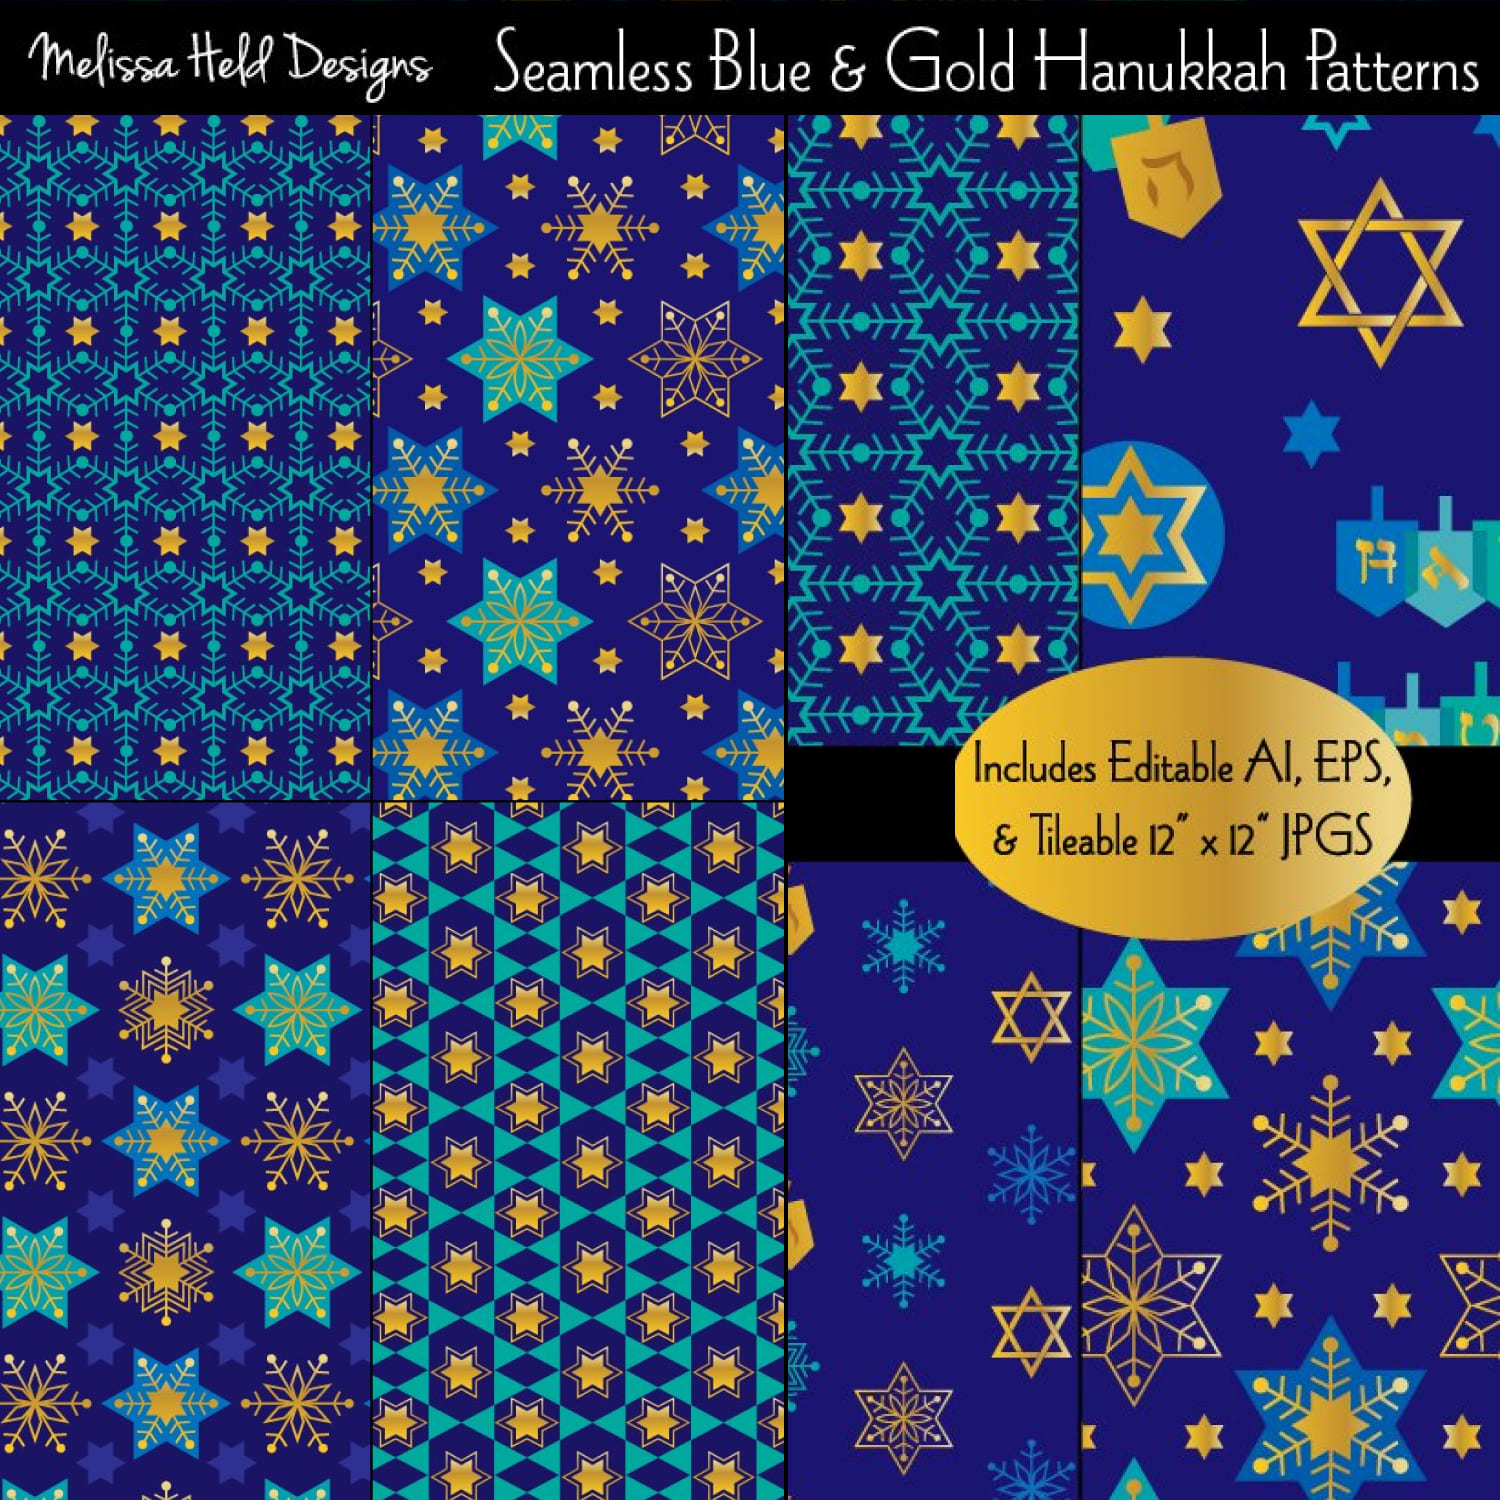 Prints of seamless blue gold hanukkah patterns.